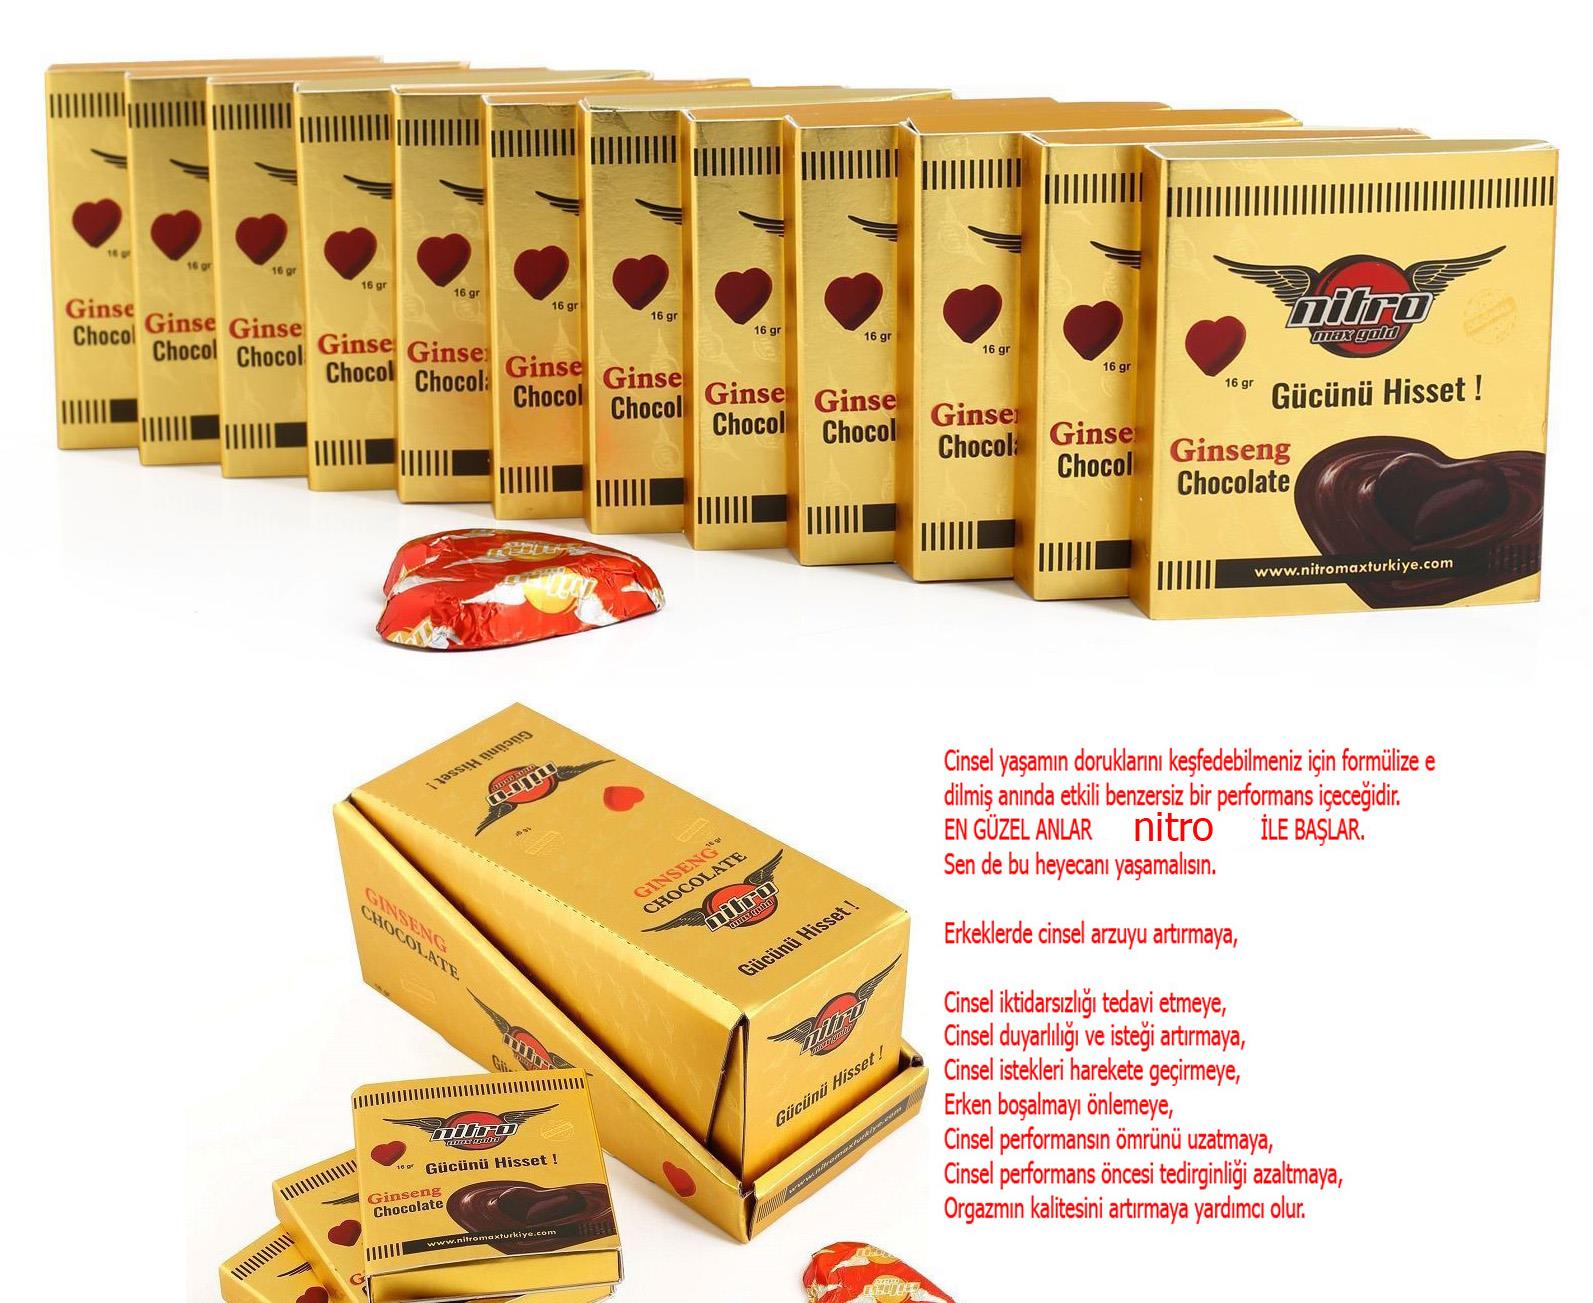 Nitro Max Gold Enerji Çikolatası 12 li Paket,48 Hours,Süpermarket